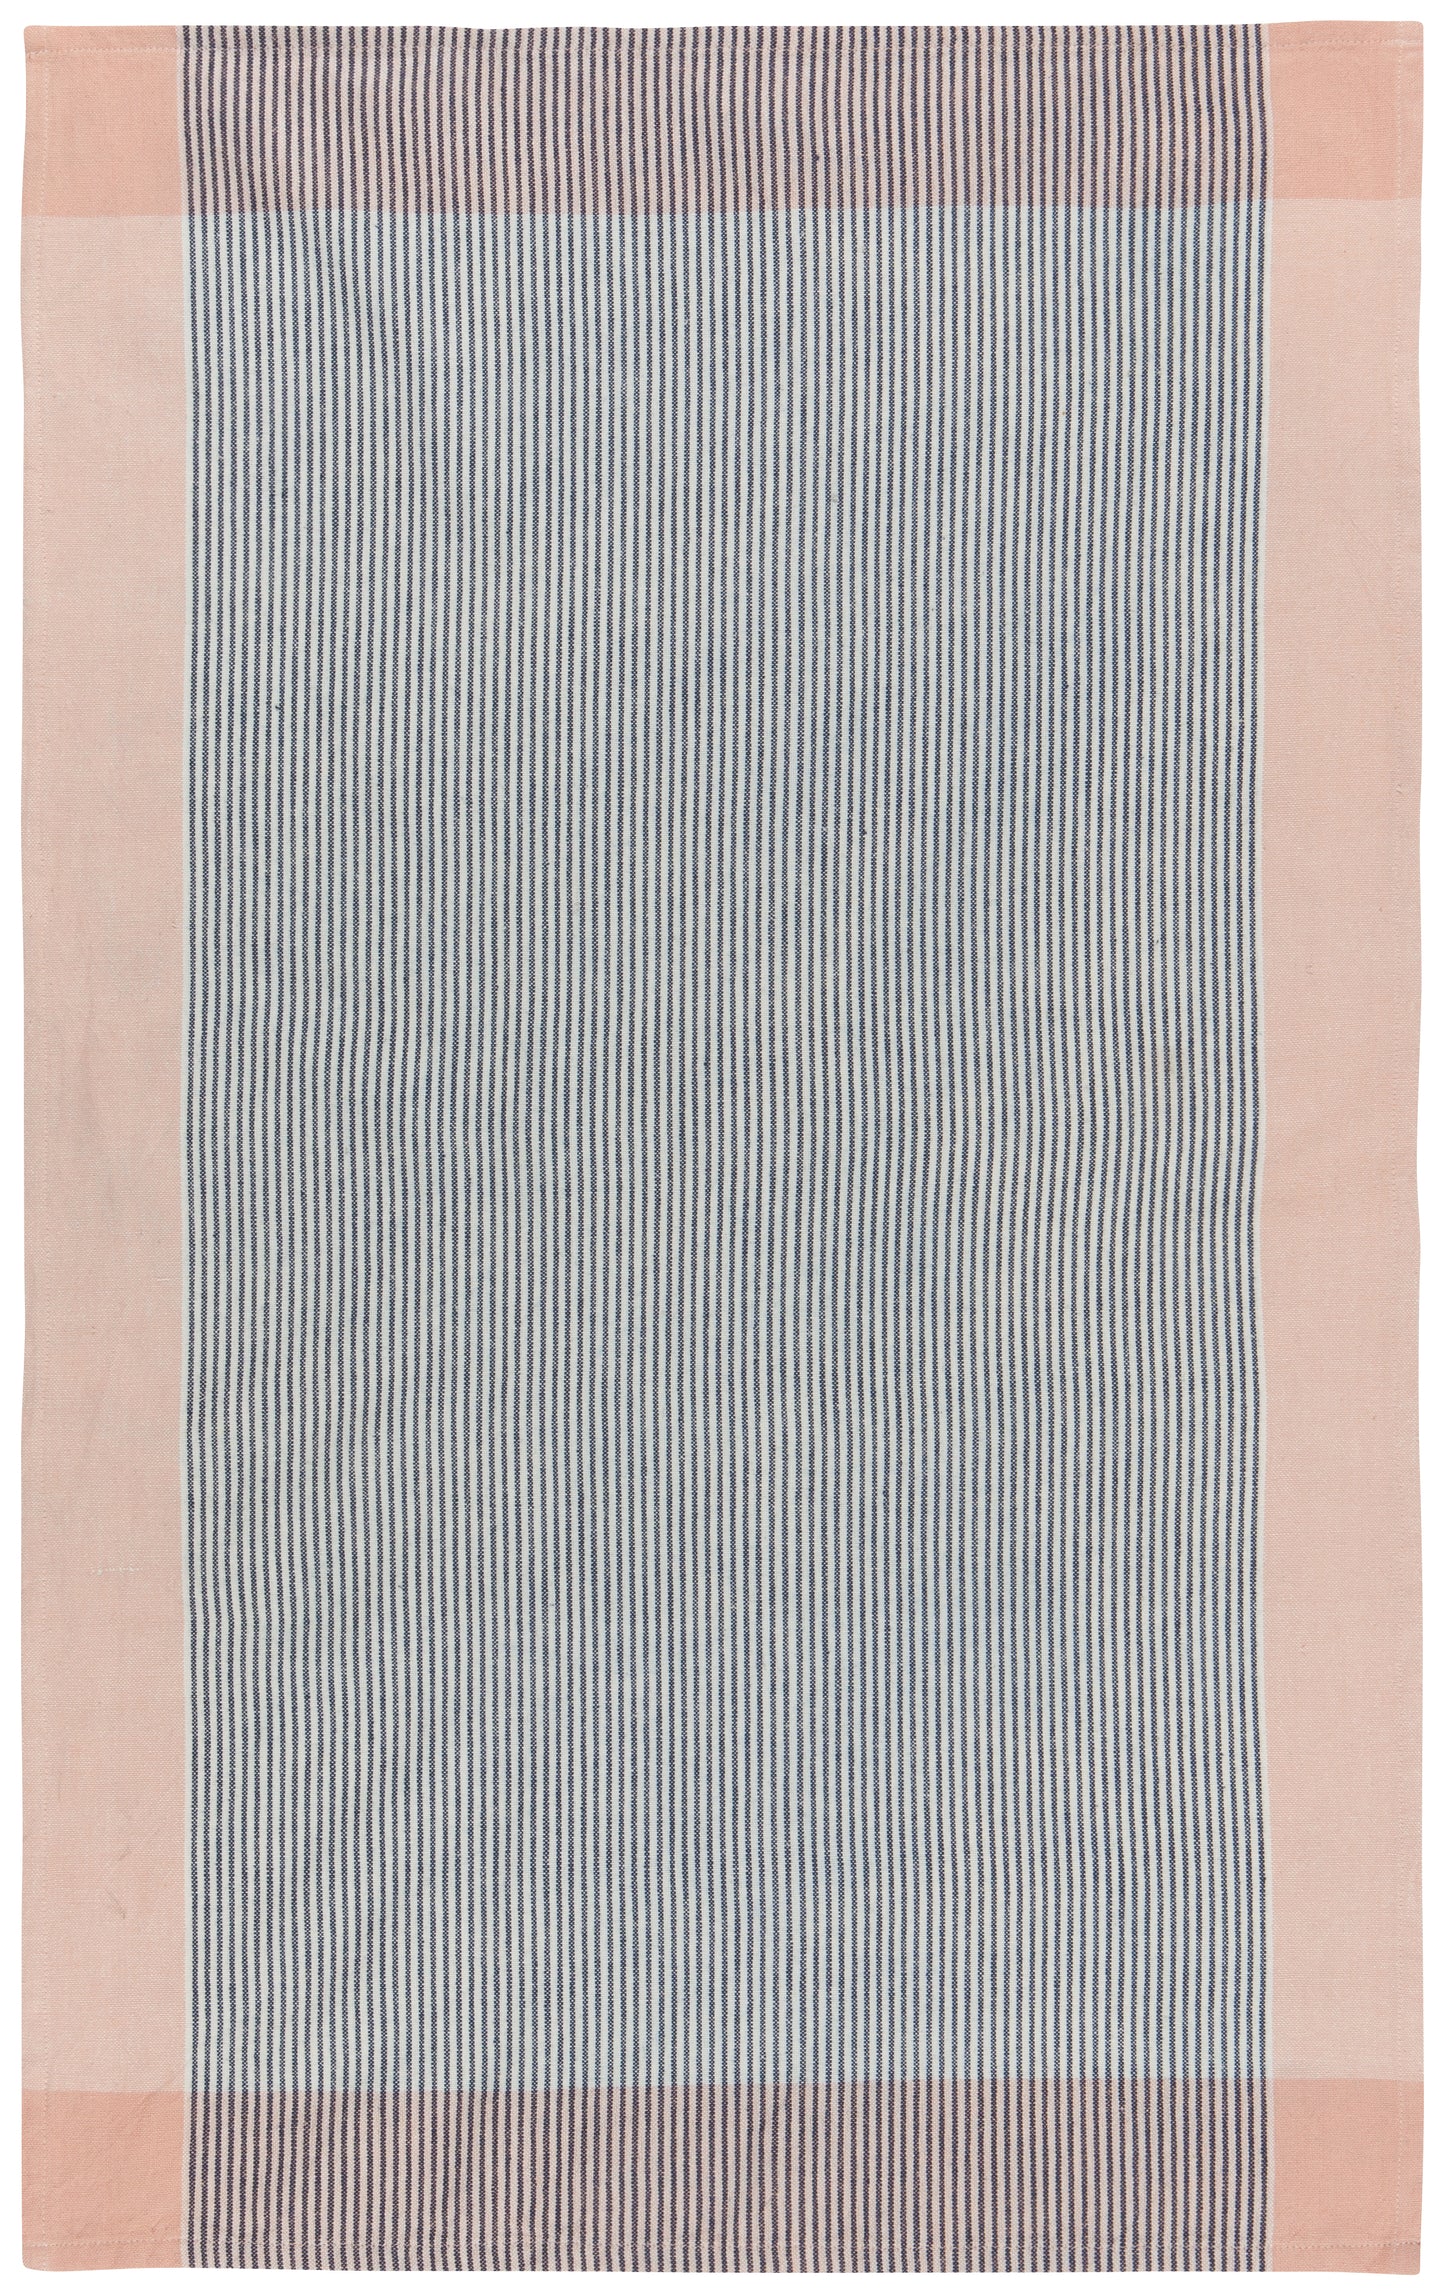 Array Stripe Nectar Tea Towel Set Of 2